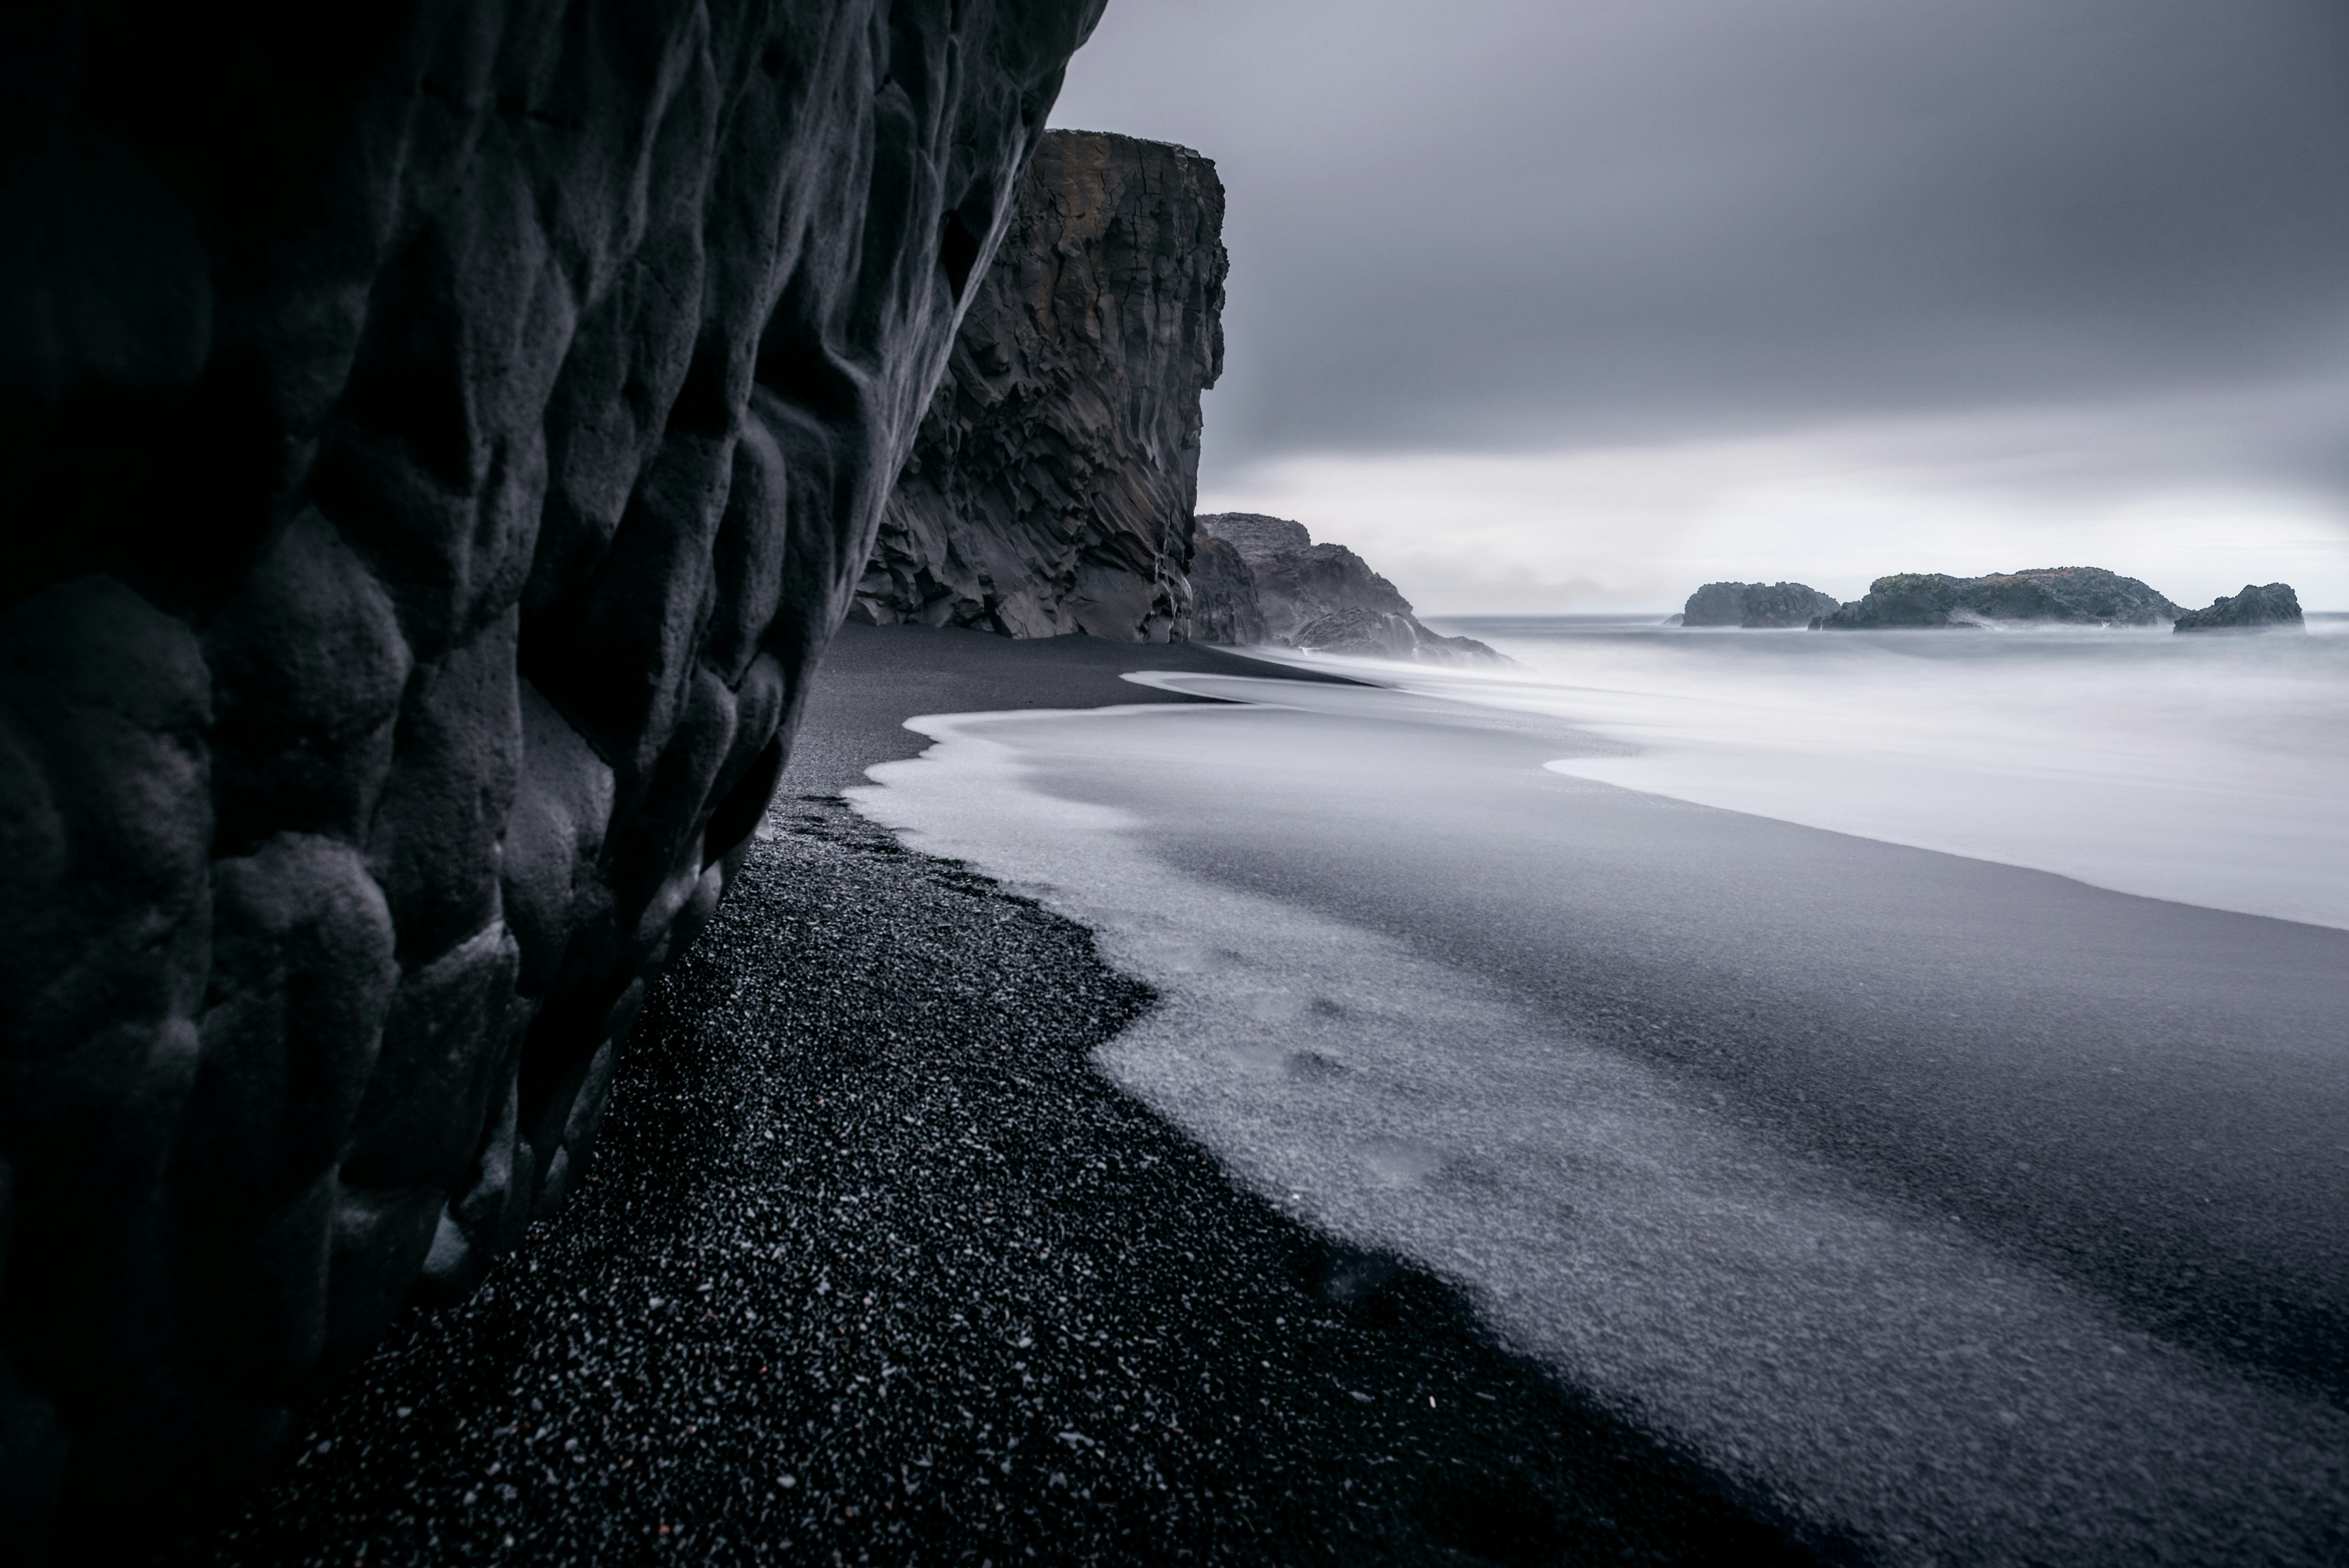 grayscale photography of seashore and calm sea